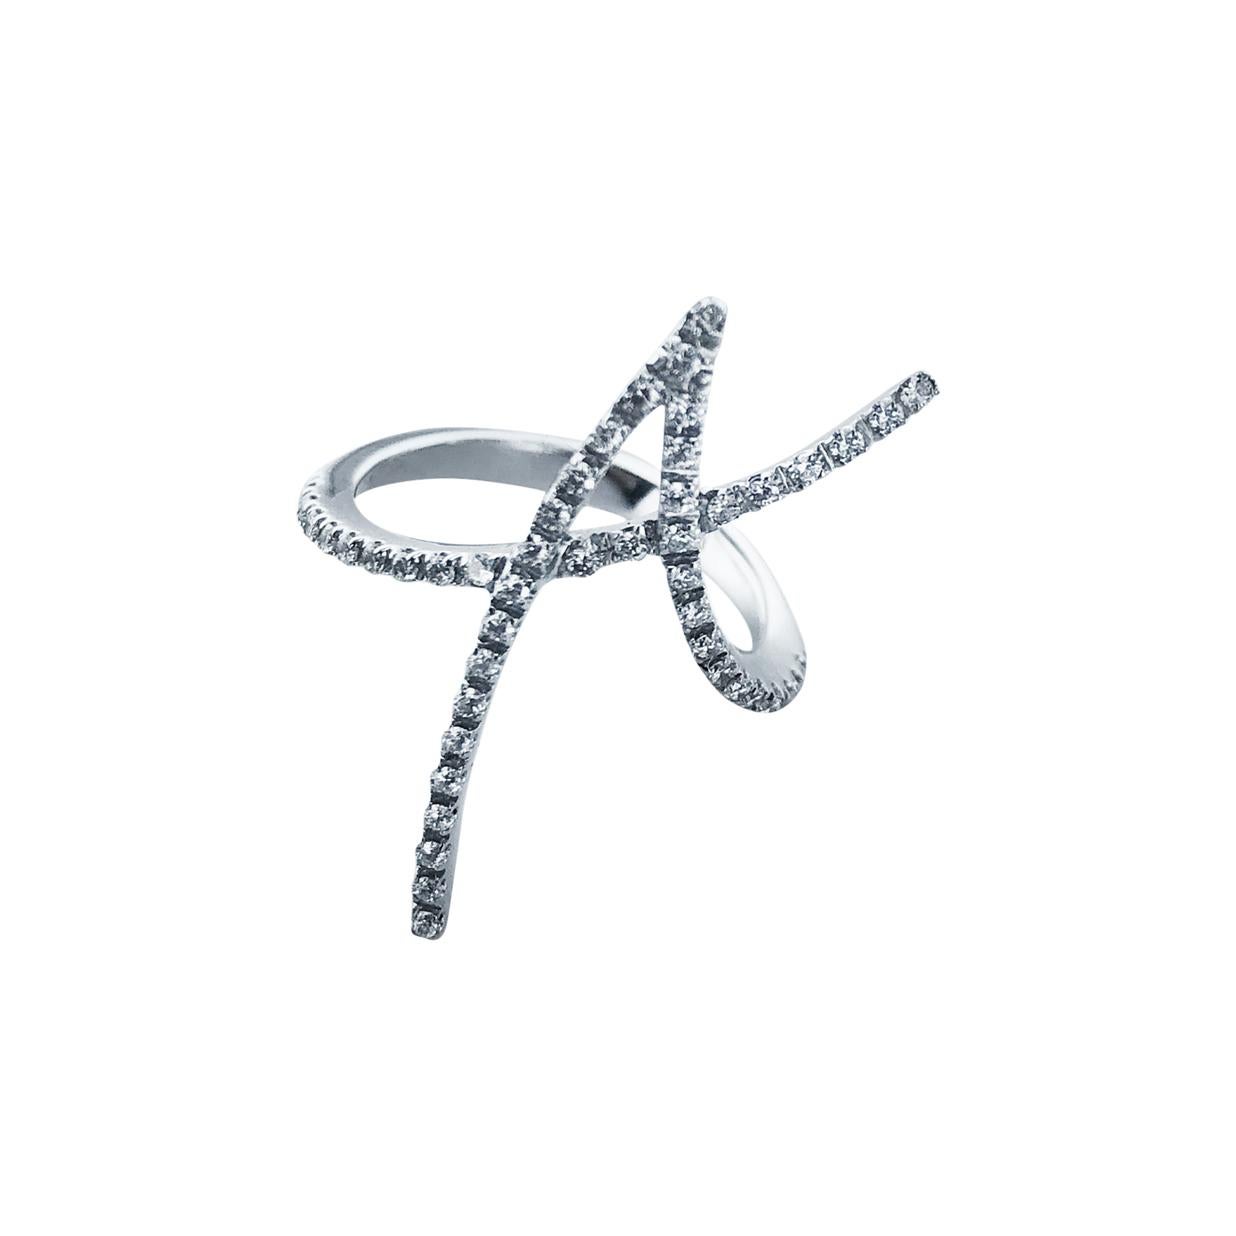 0.35 Carat Diamond set in 18Kt White Gold Stefan Hafner Art Nouveau Style Ring For Sale